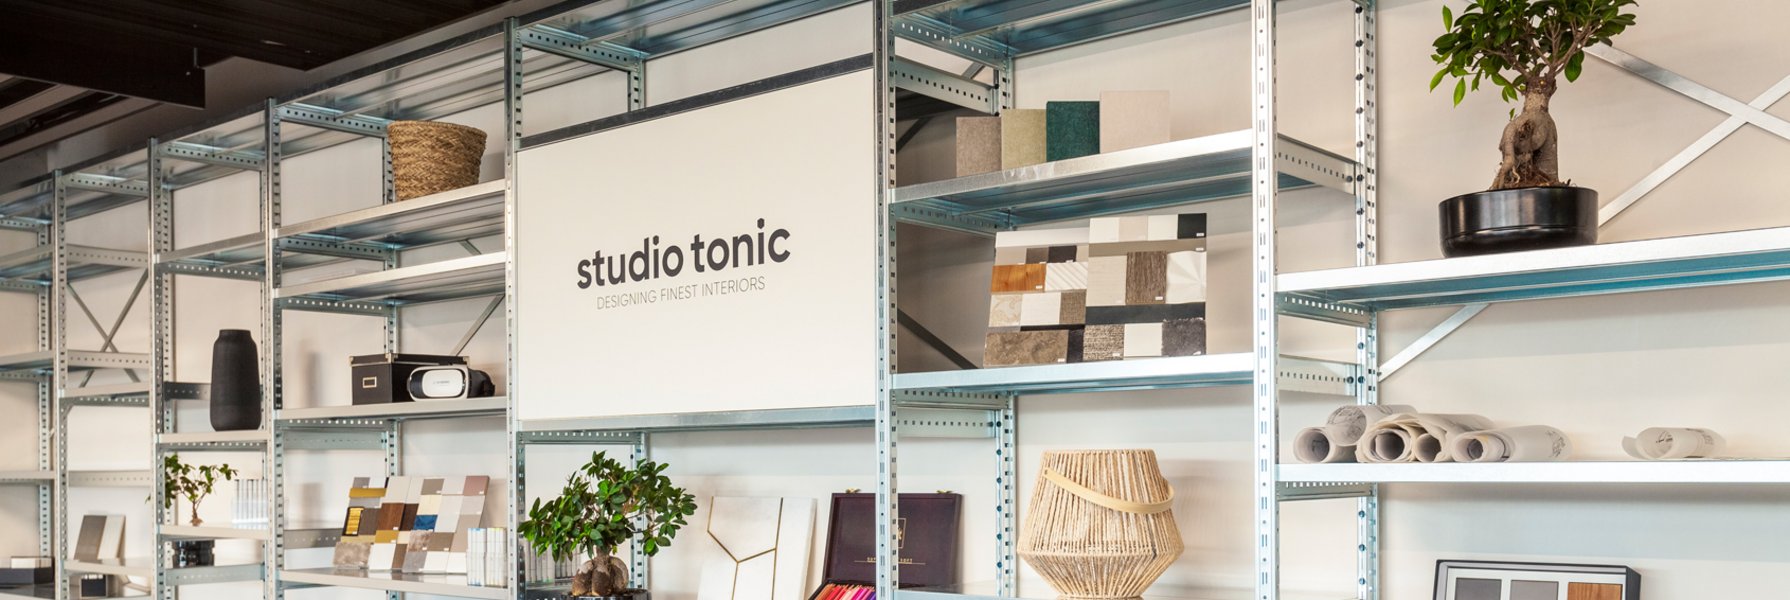 Studio Tonic-Inwil-neues Office